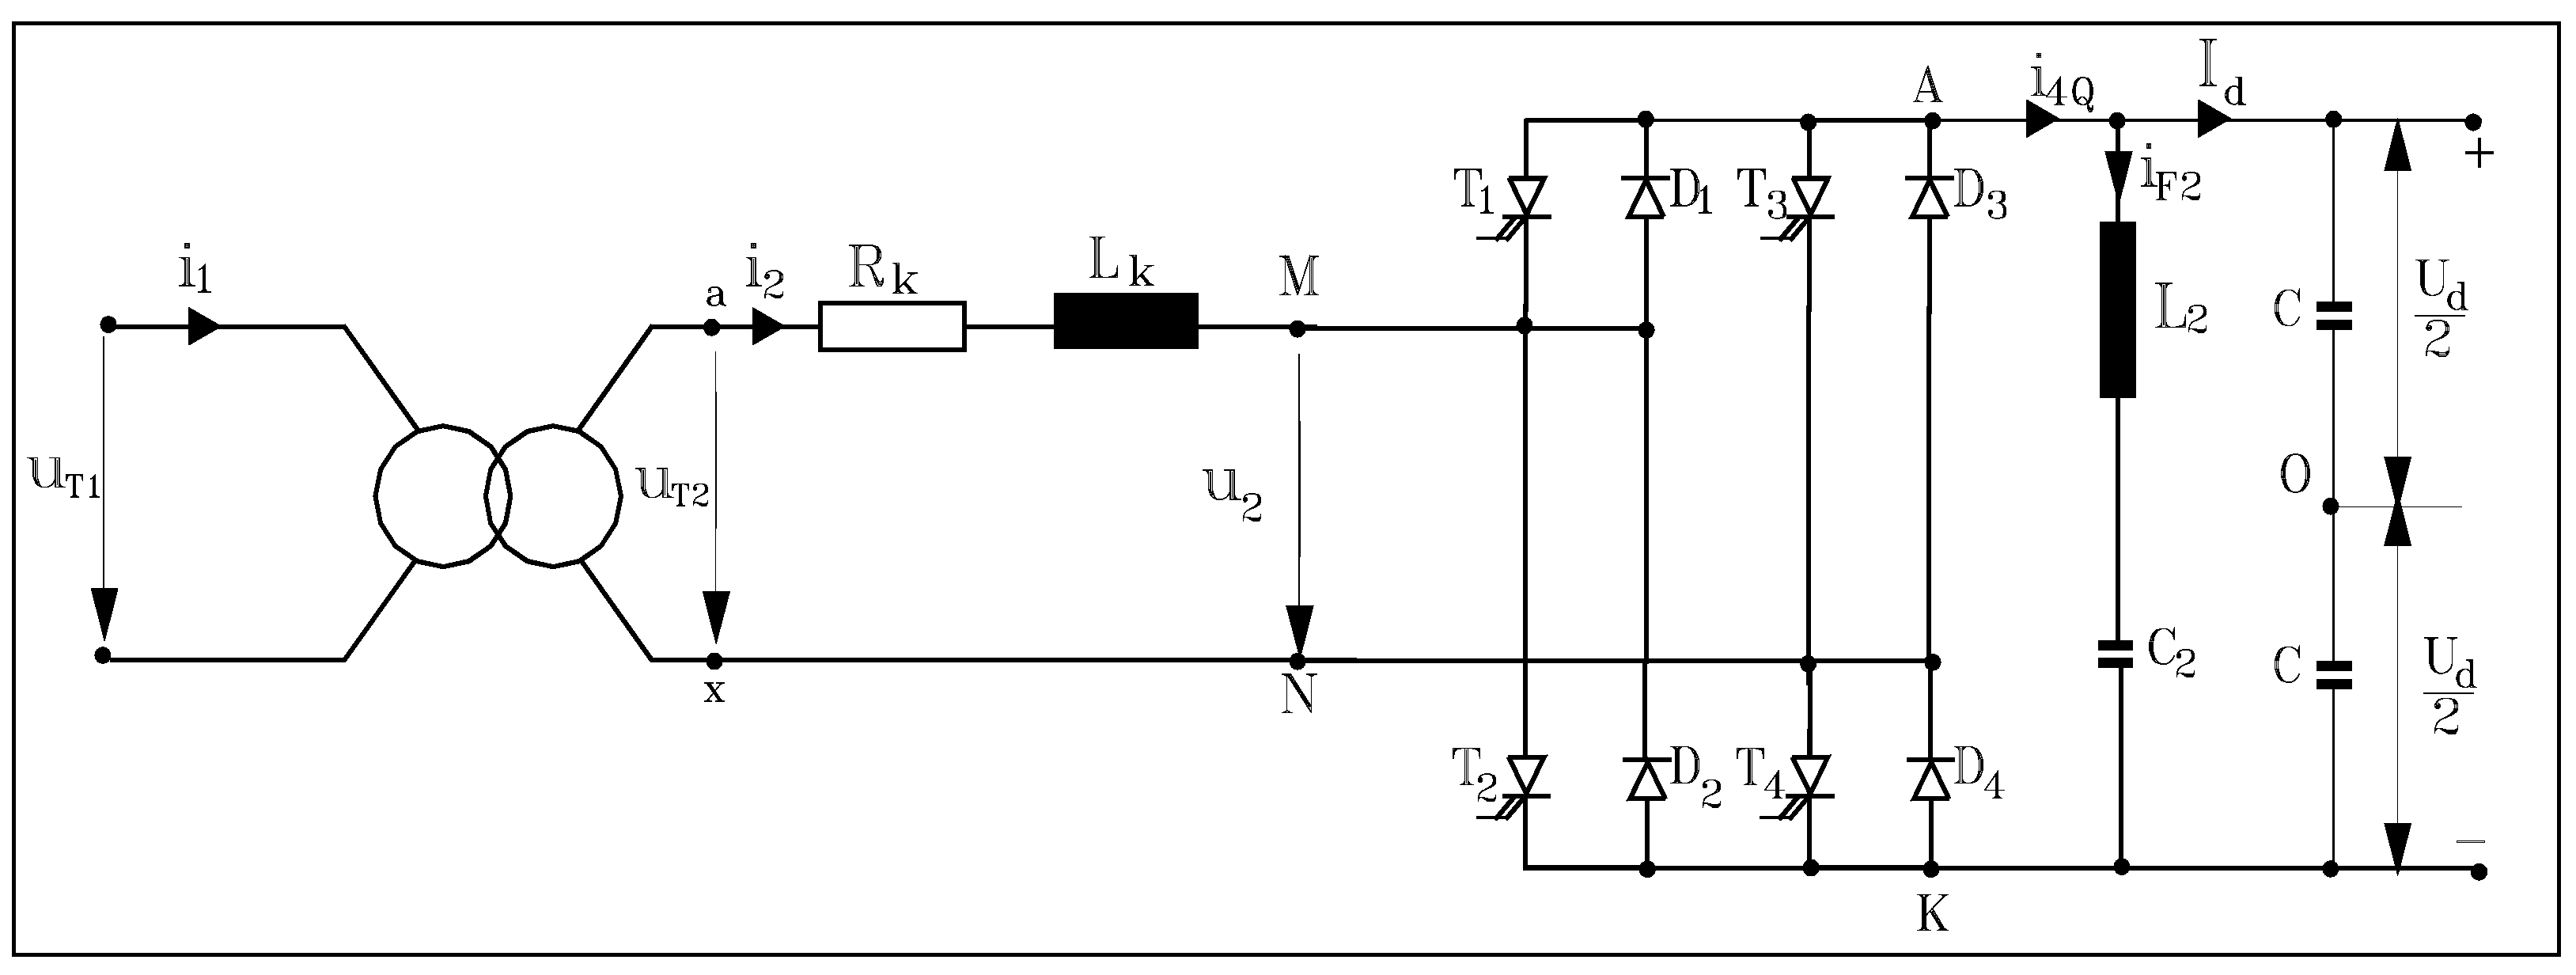 cjb siren wiring diagram